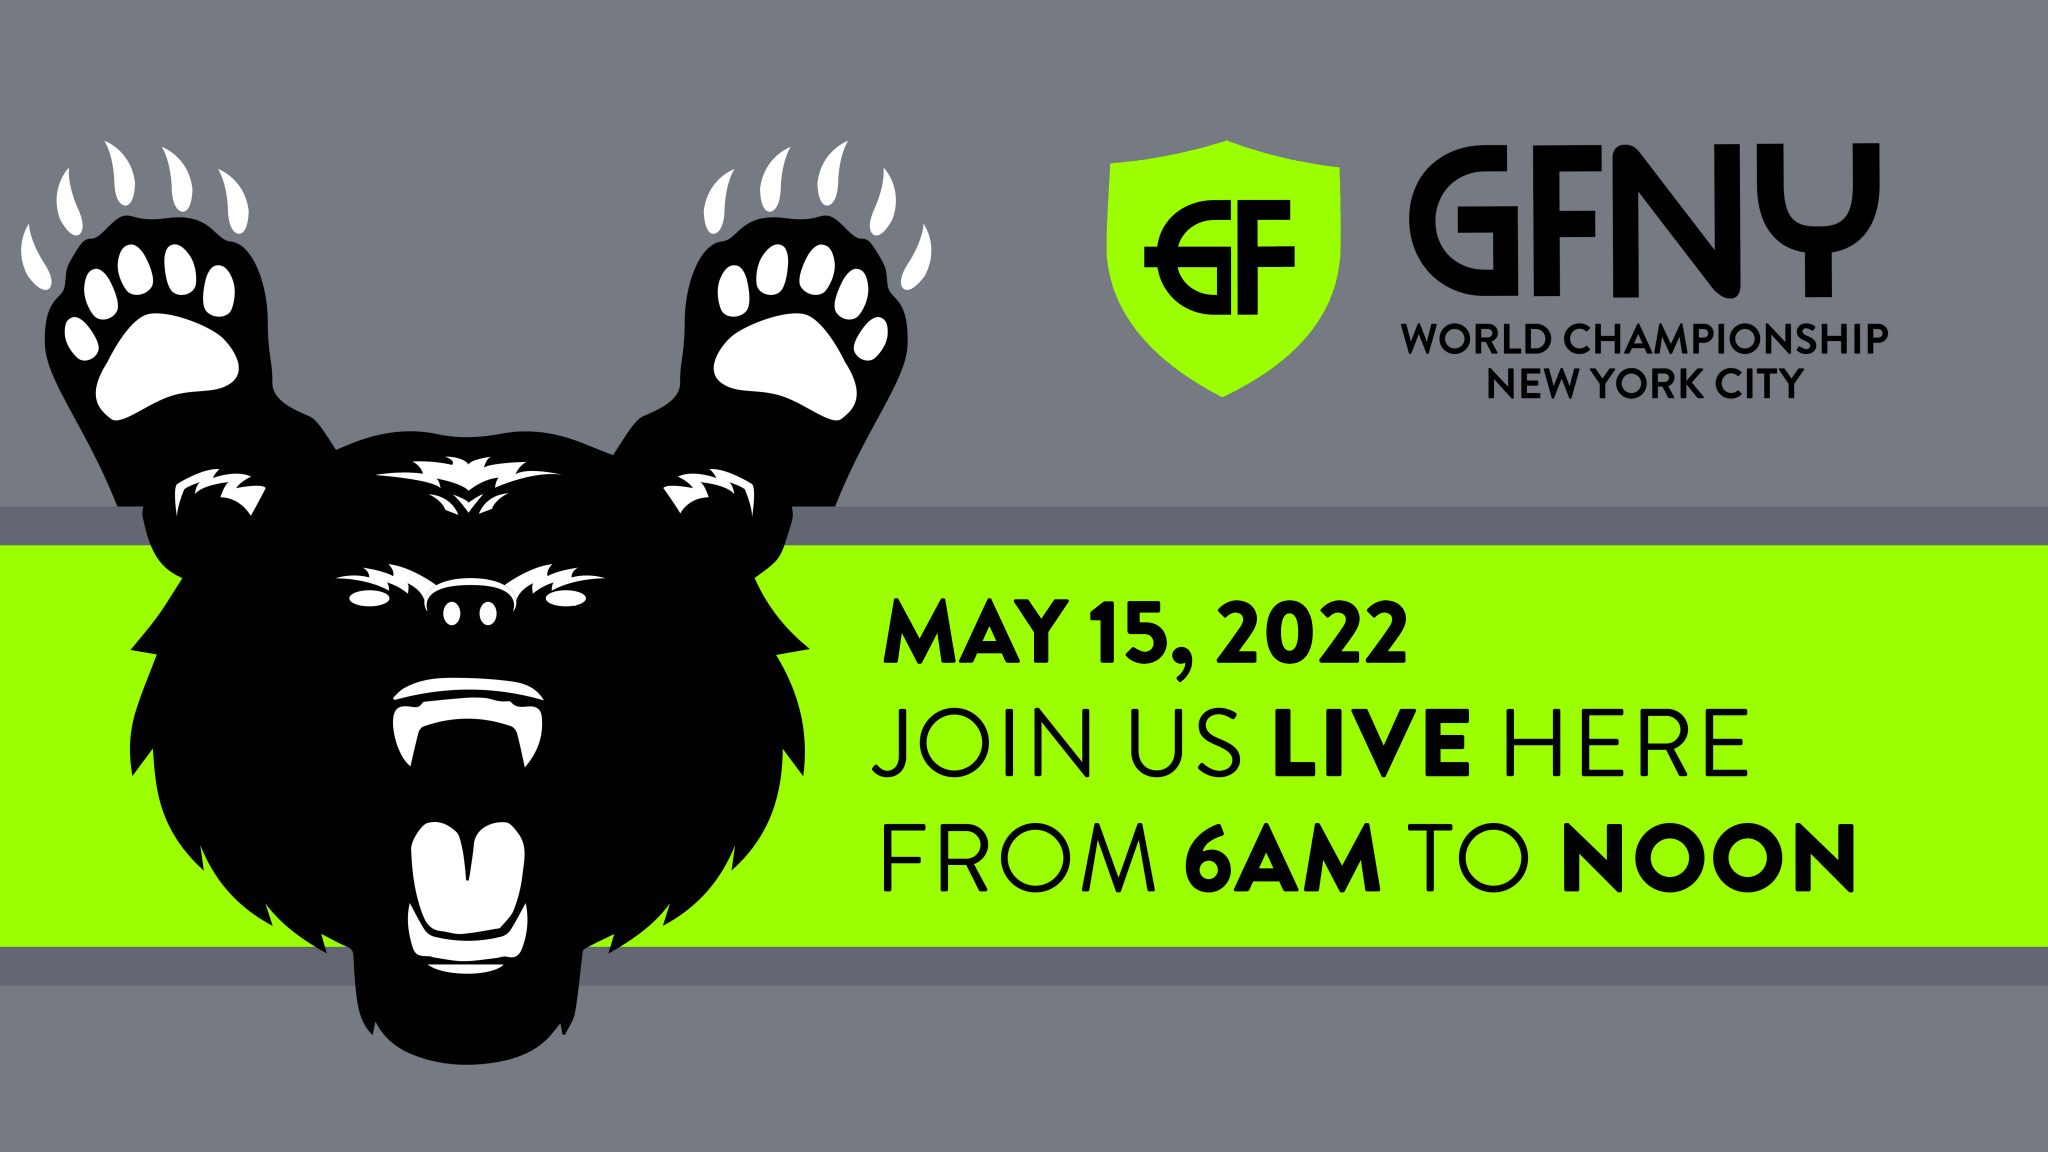 Live this Sunday 10th GFNY World Championship NYC GFNY Global